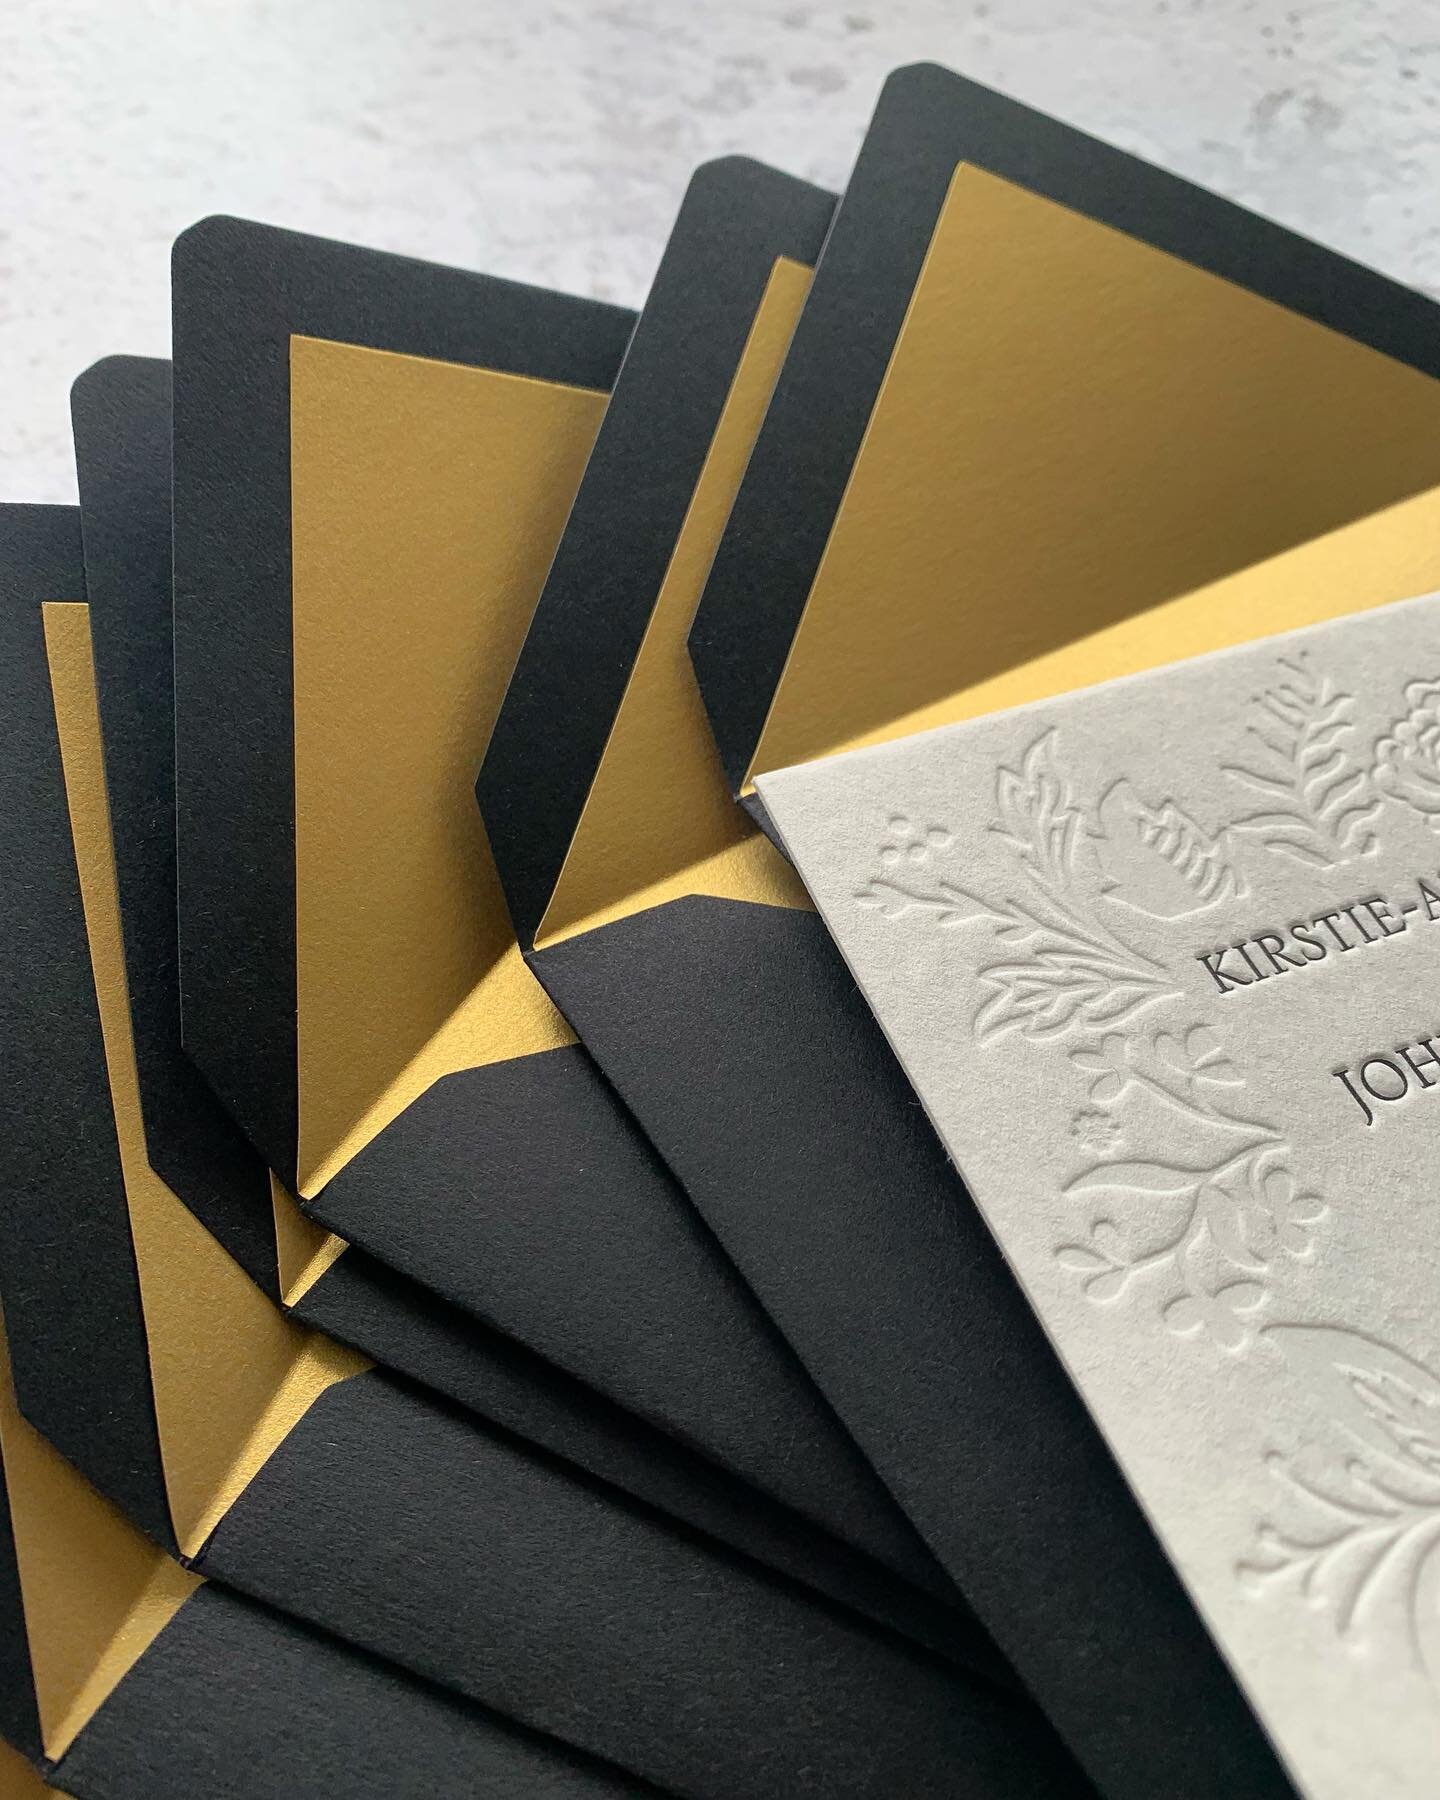 Behind the scenes, black and gold ✨🖤
#letterpresslove #blackandgold #blacktiewedding #luxwedding #wedding #letterpressinvitations